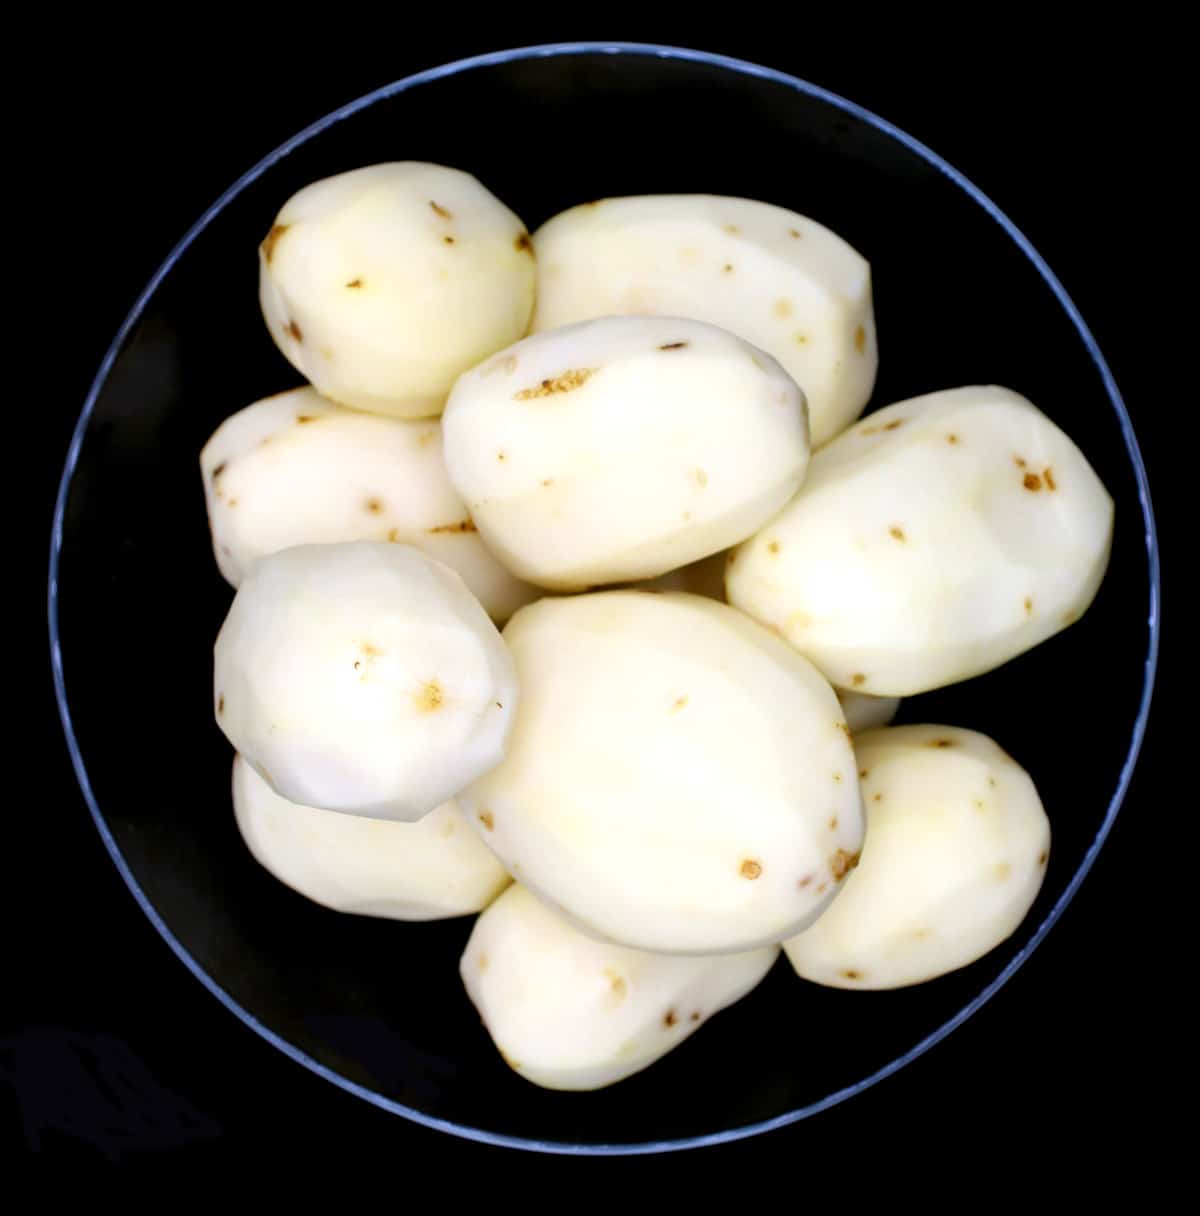 Peeled potatoes in black bowl.